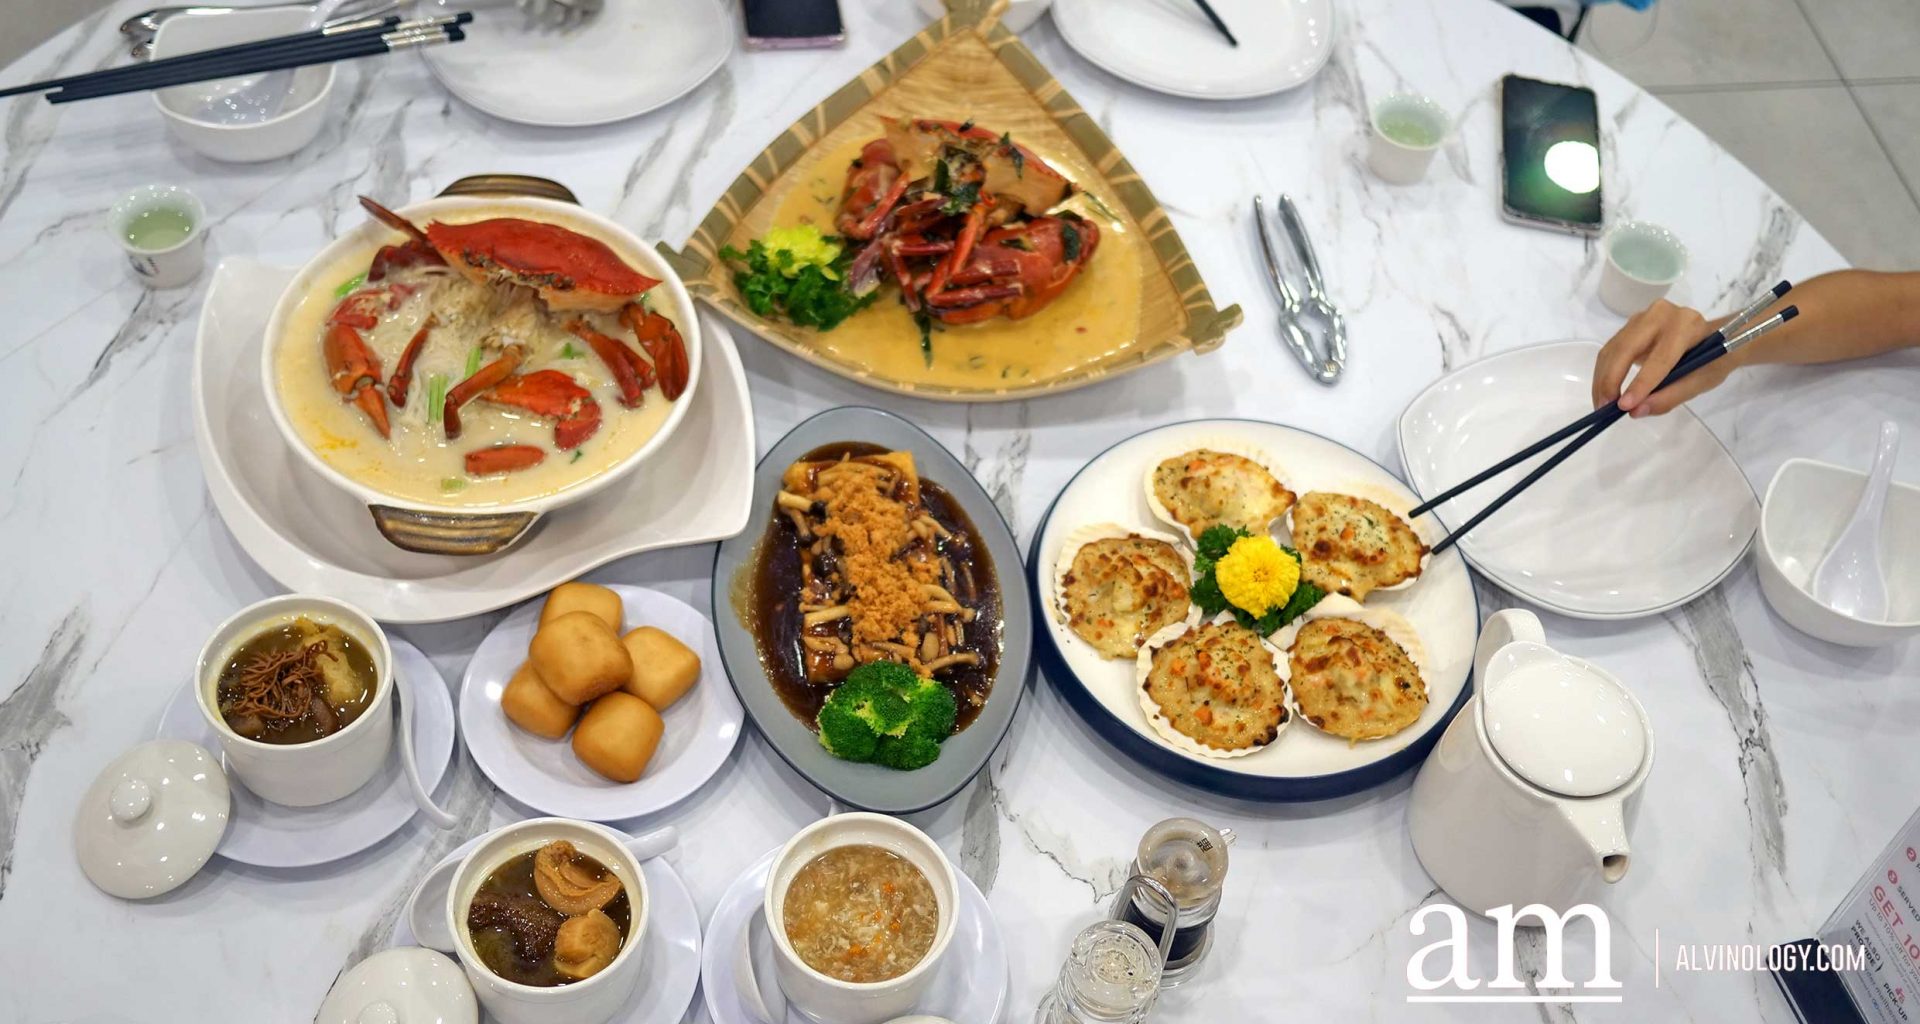 [Review] Beautifully Presented Seafood Dishes at Mellben Signature @ Tanjong Pagar Plaza - Alvinology